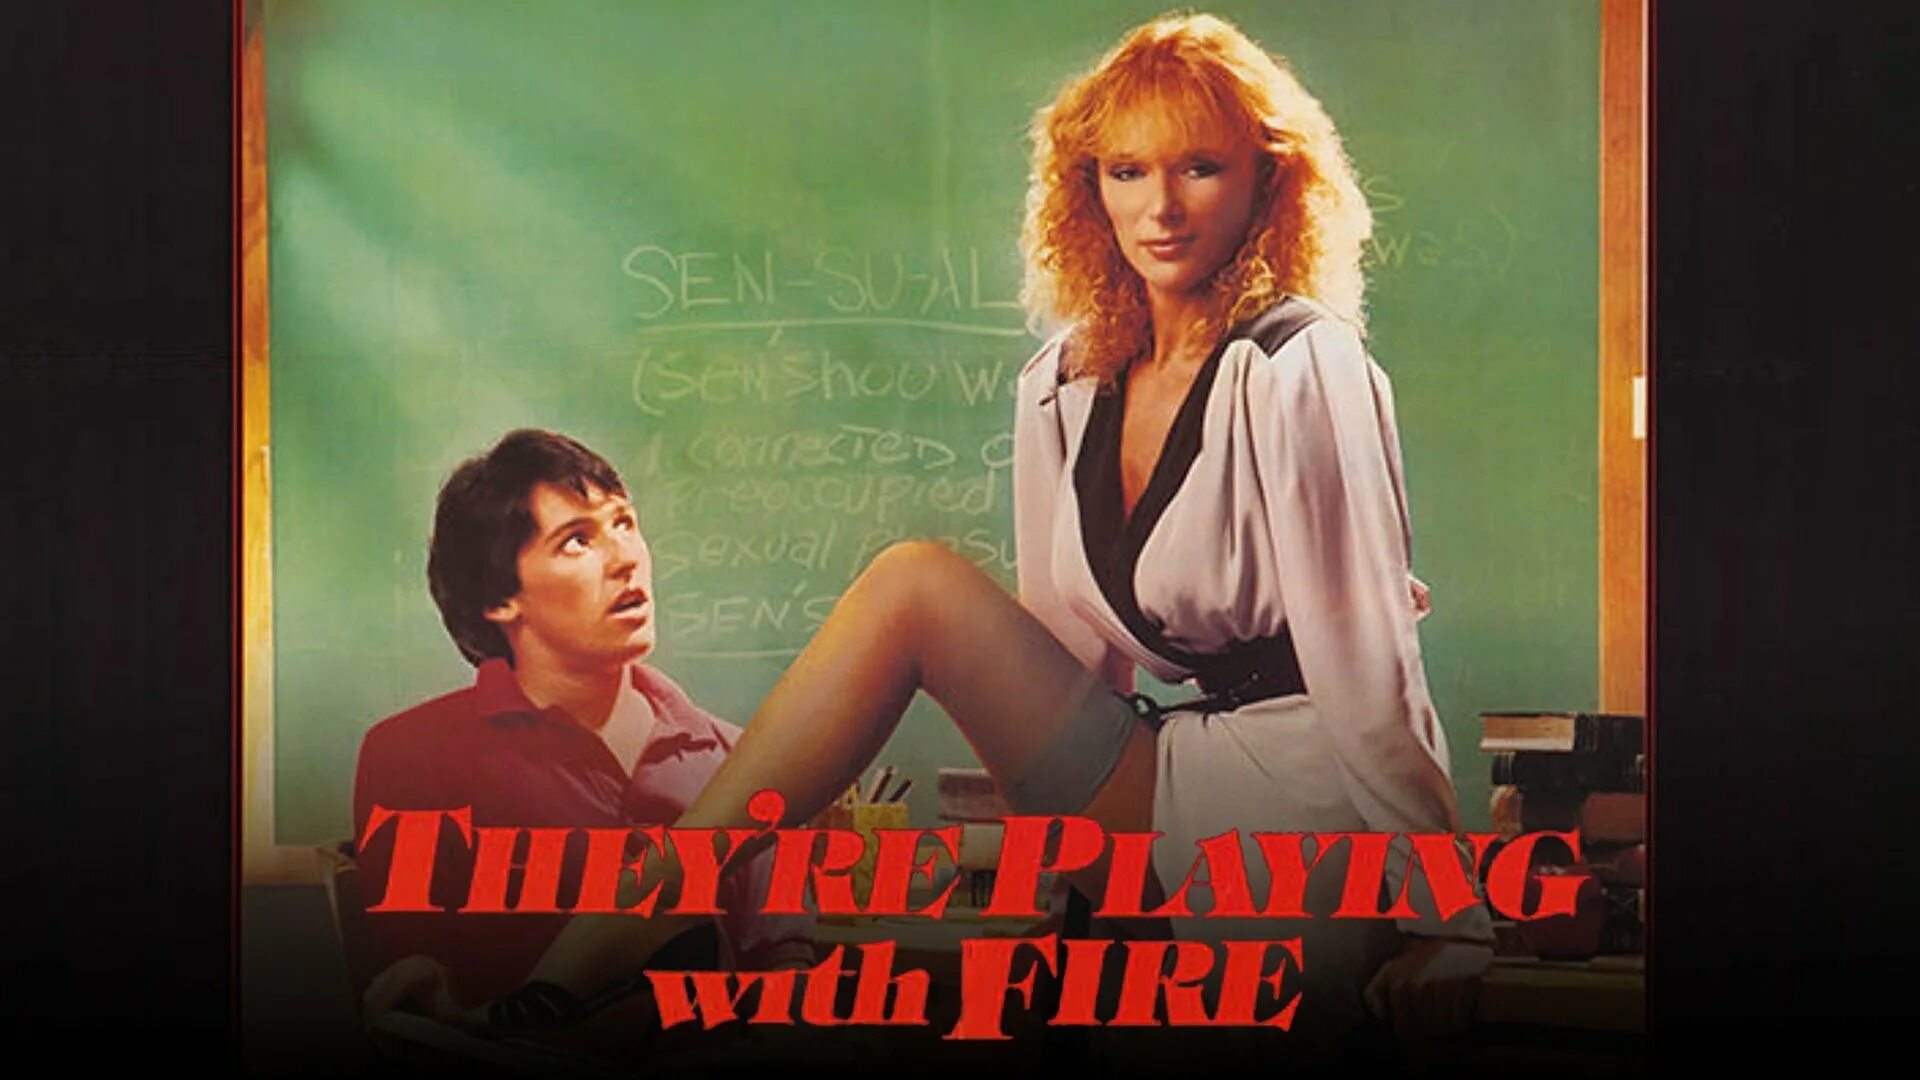 Сибил Даннинг they're playing with Fire. They're playing with Fire 1984. Частные уроки игры